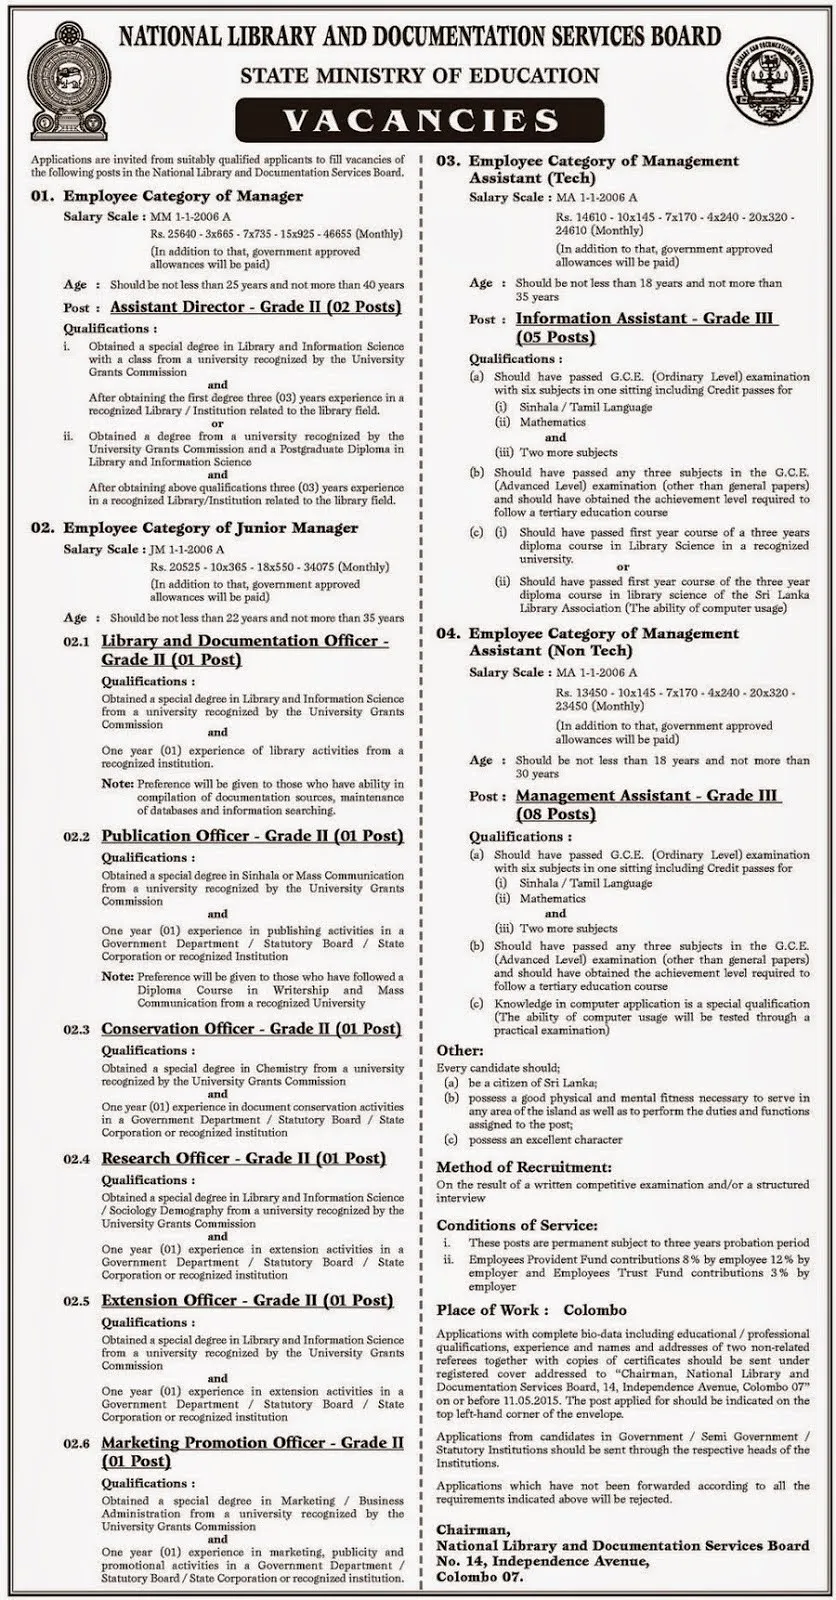 Sri Lanka National Library and Documentation Services Board Vacancies